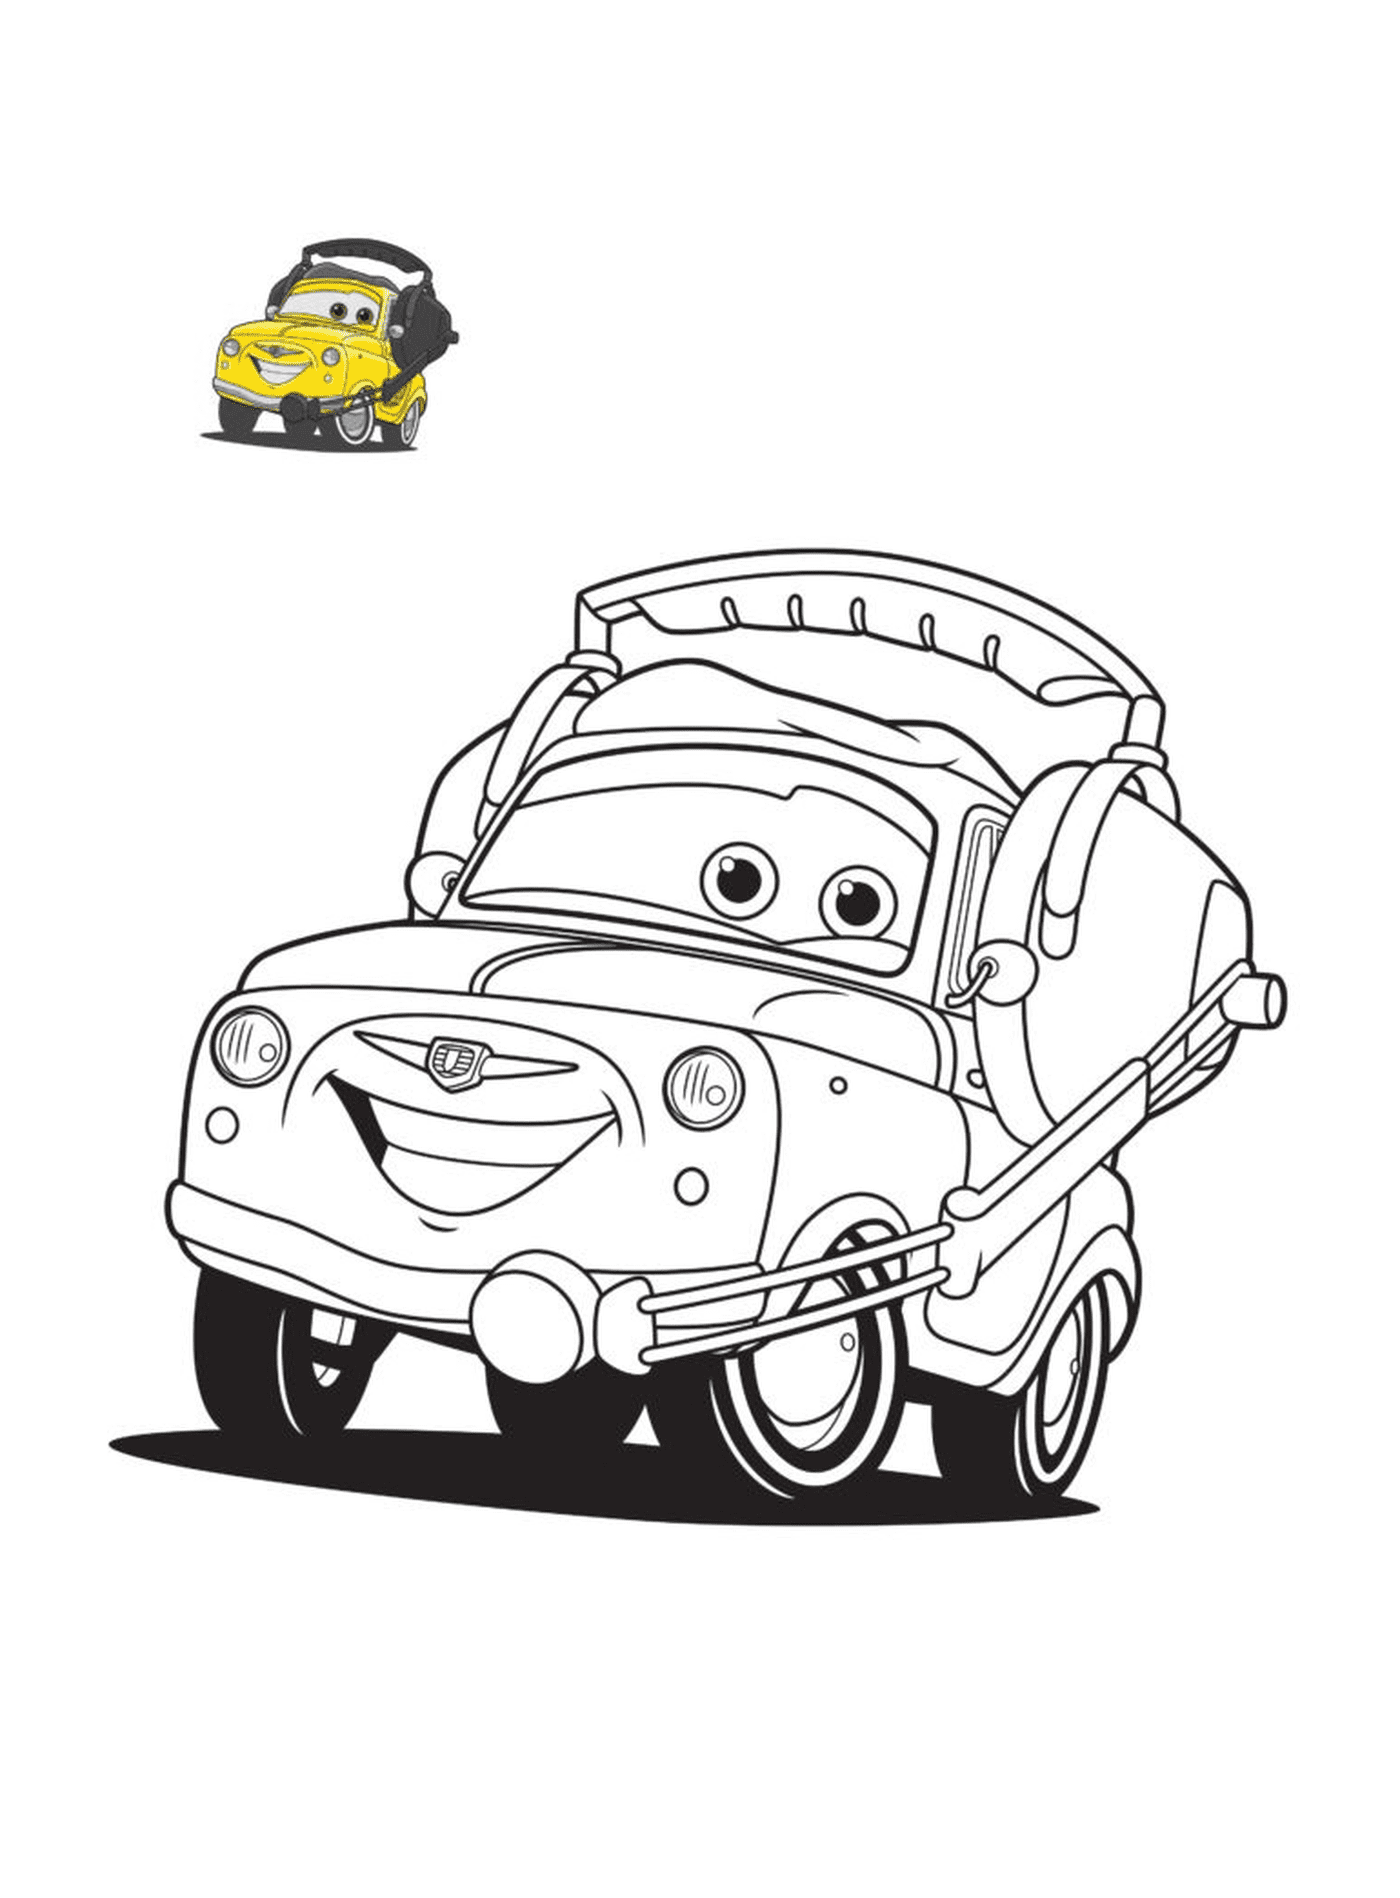 cars 3 luigi personnage dans film cars voiture jaune